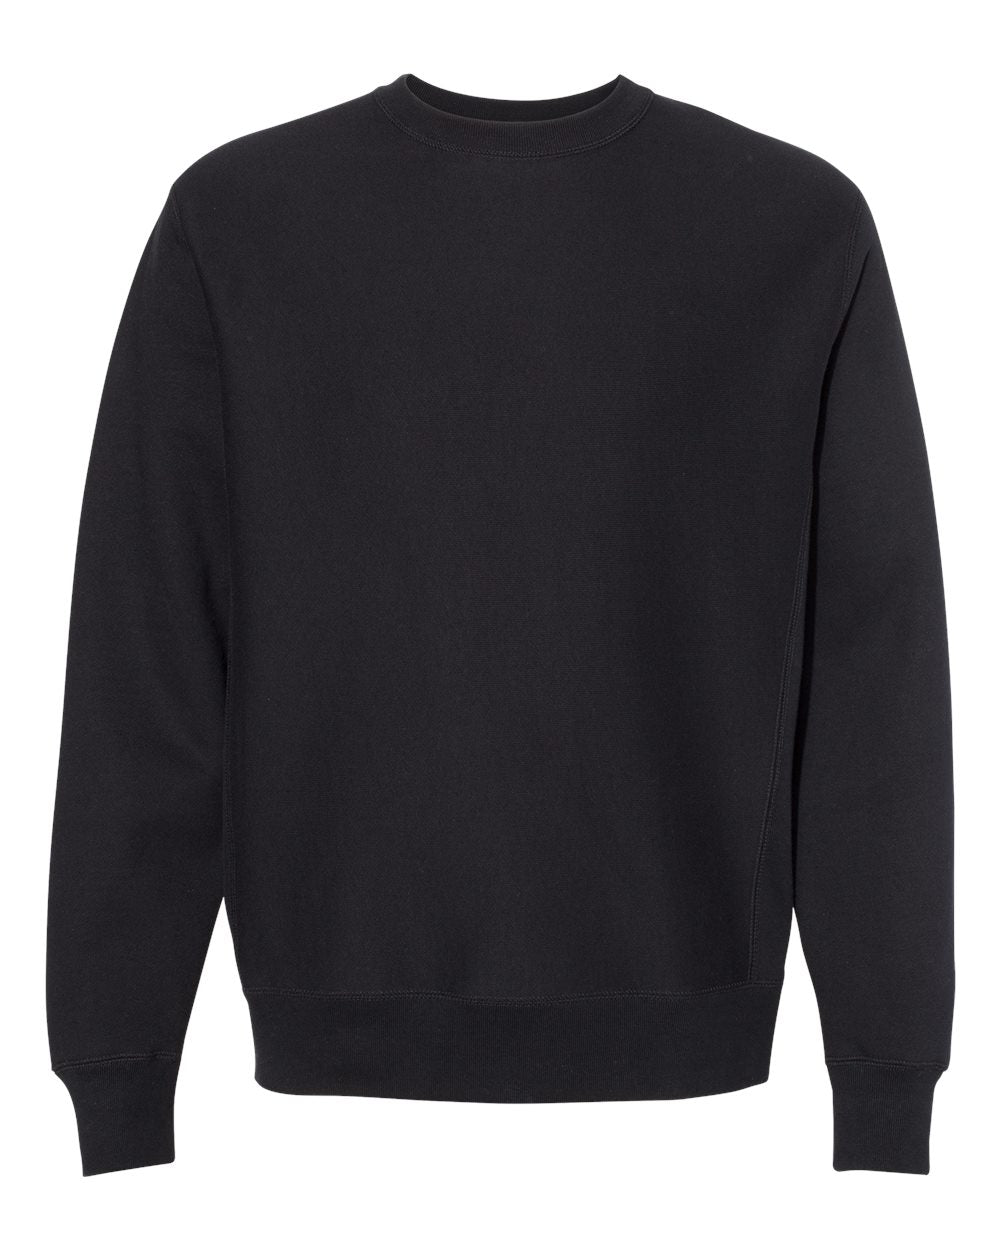 Independent Trading Co. Legend - Premium Heavyweight Cross-Grain Crewneck Sweatshirt IND5000C #color_Black